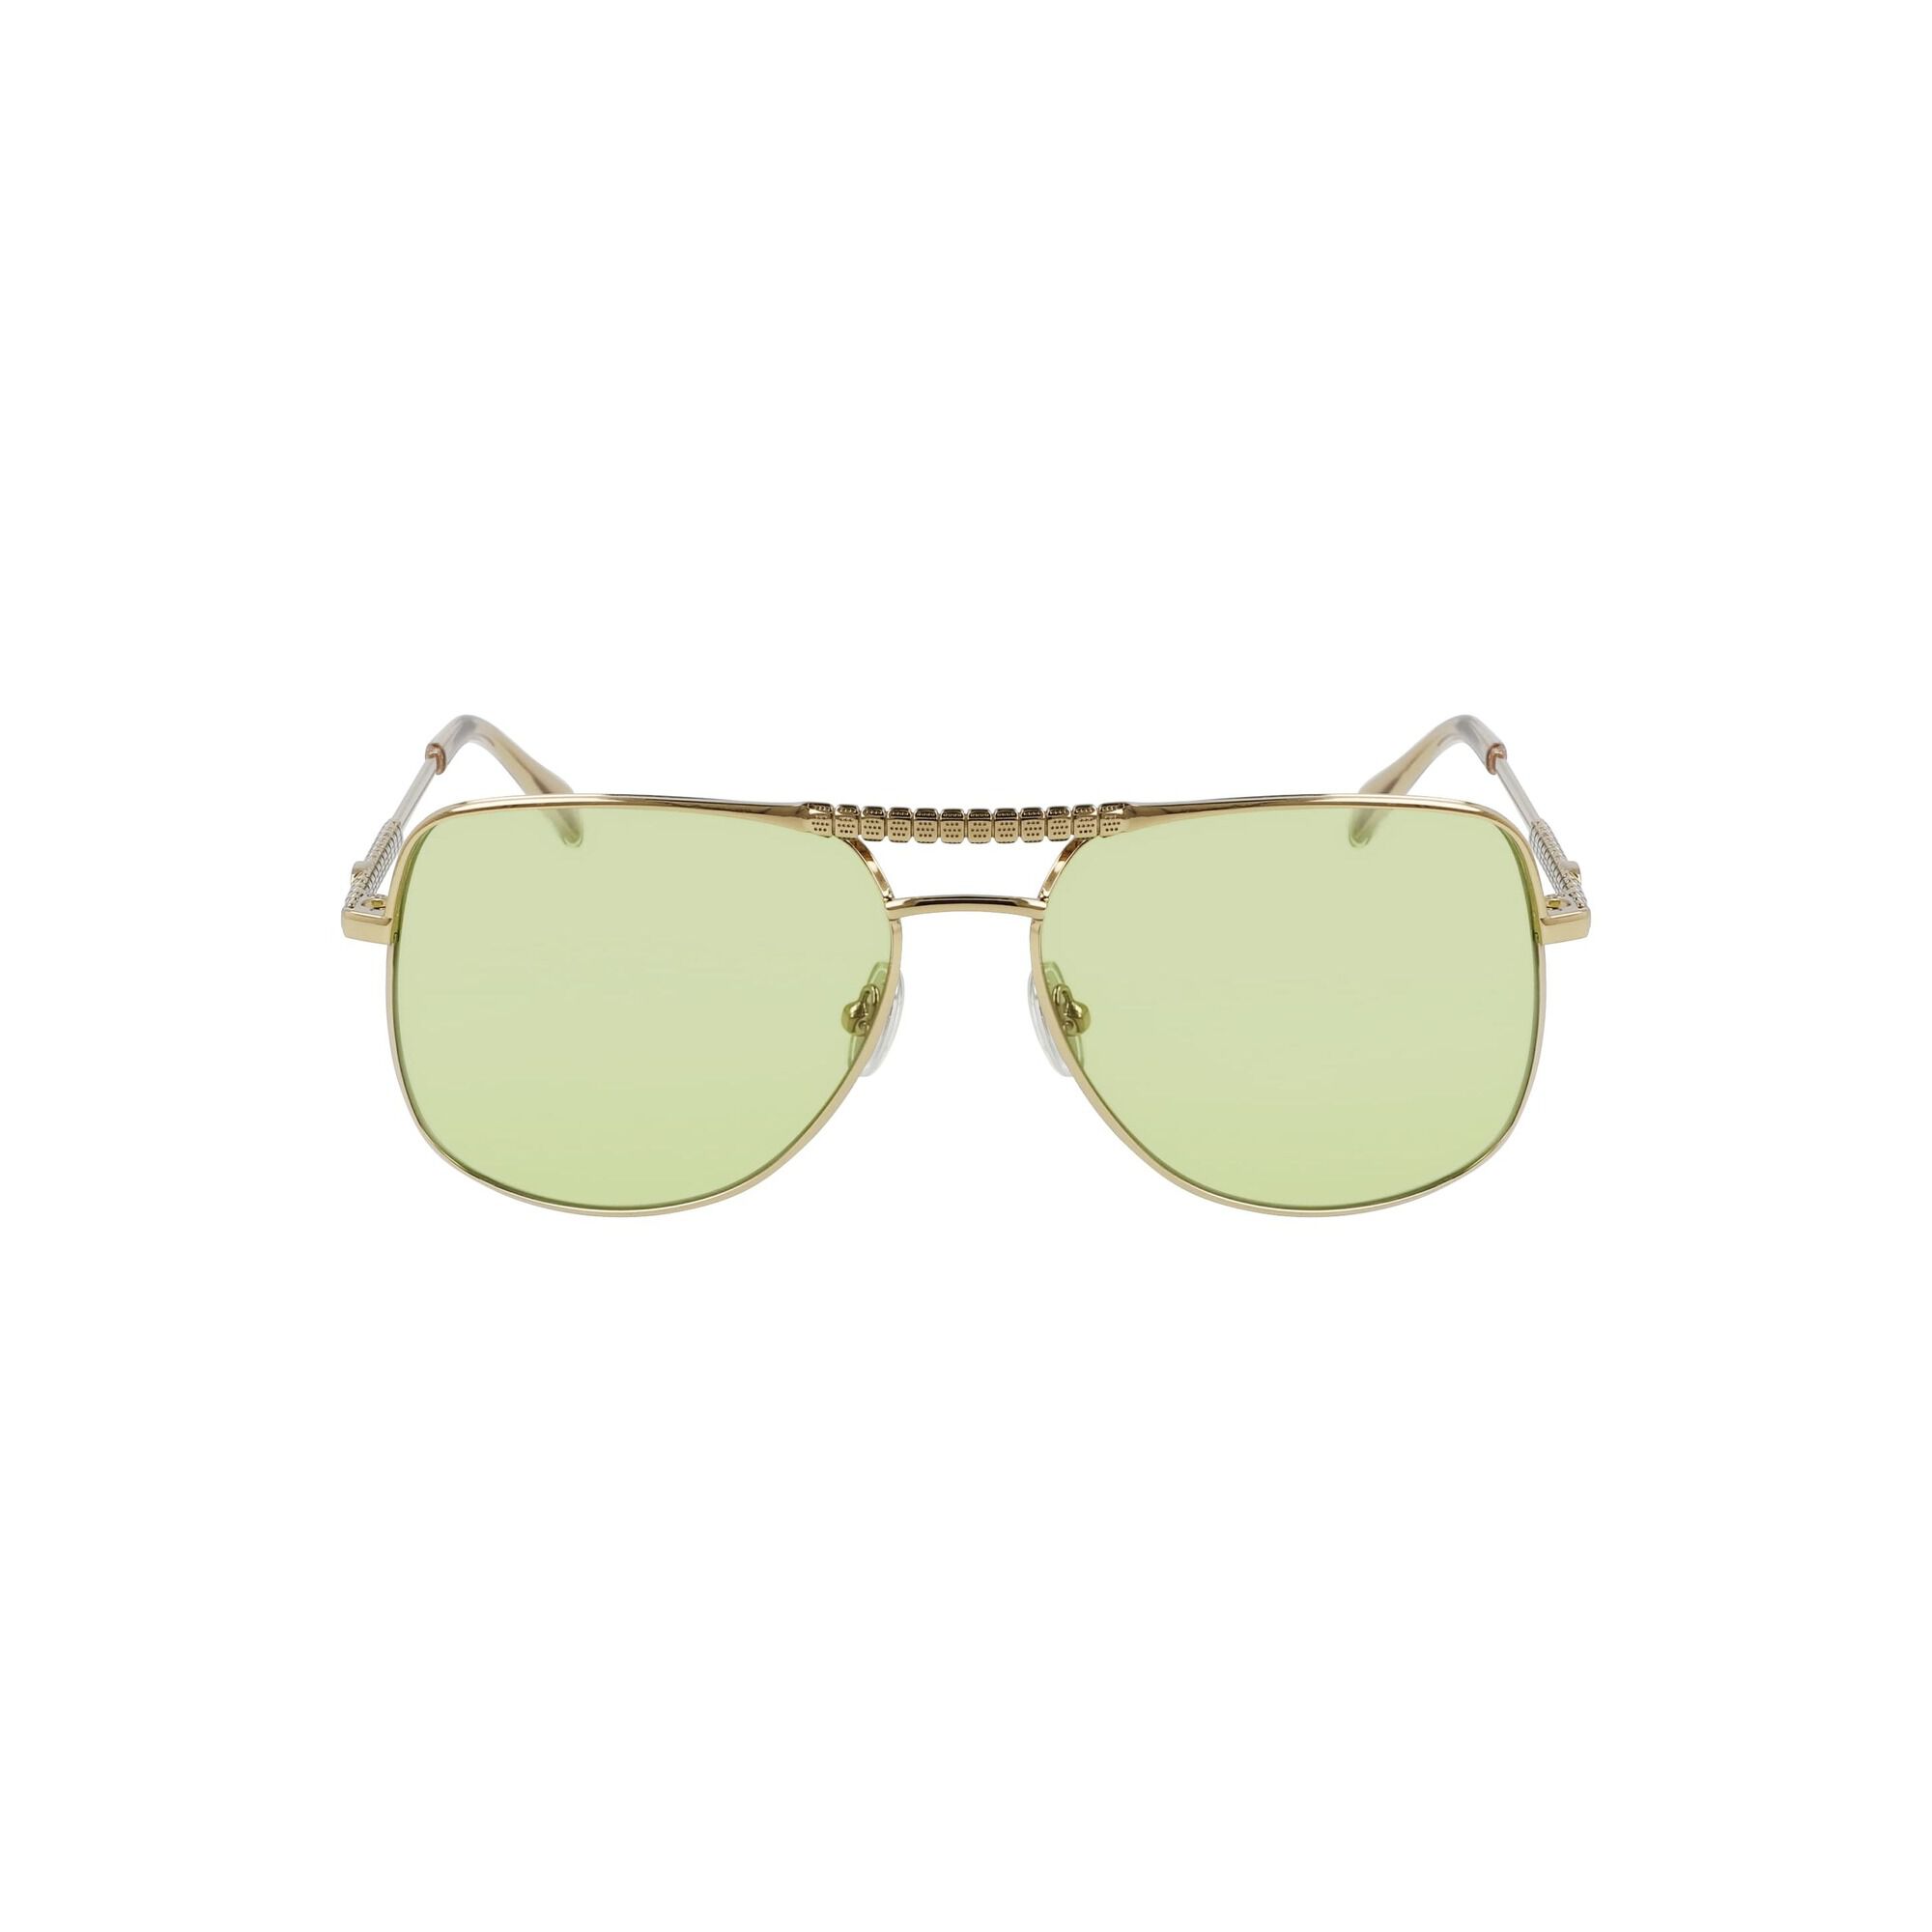 Buy Lacoste Men's L177s Aviator Sunglasses, Gold, 59 mm at Amazon.in